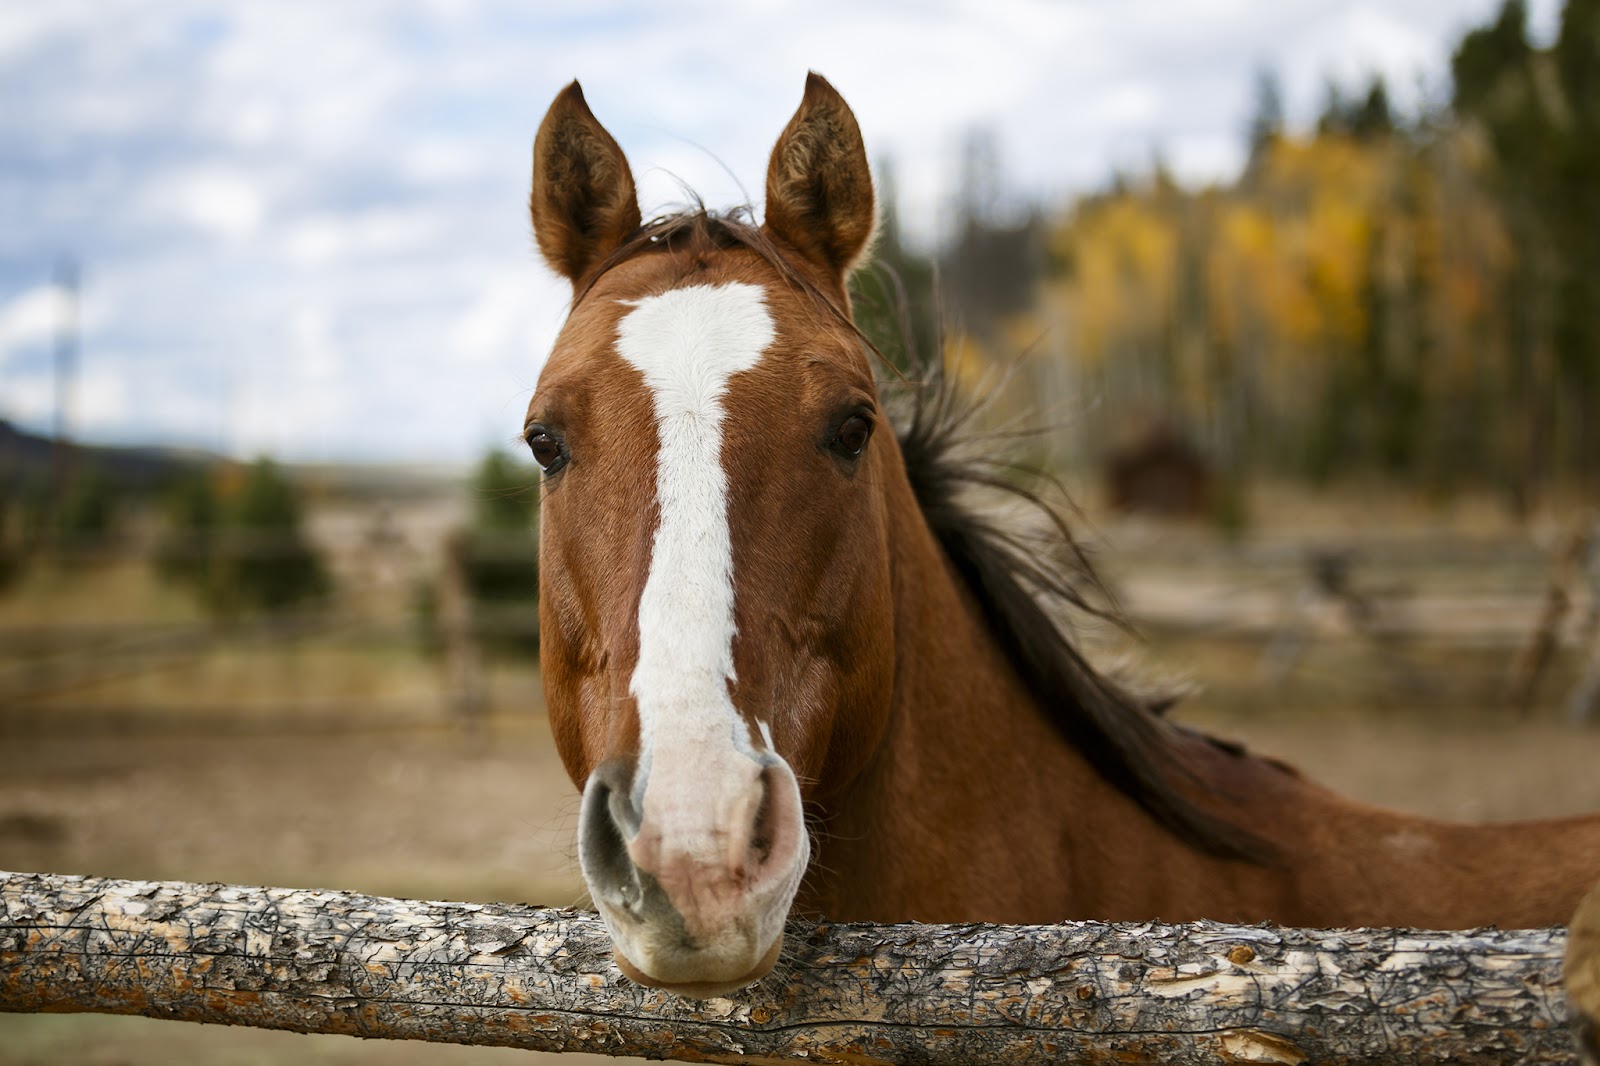 One of the horses at Rawah Ranch: All inclusive horseback riding vacation